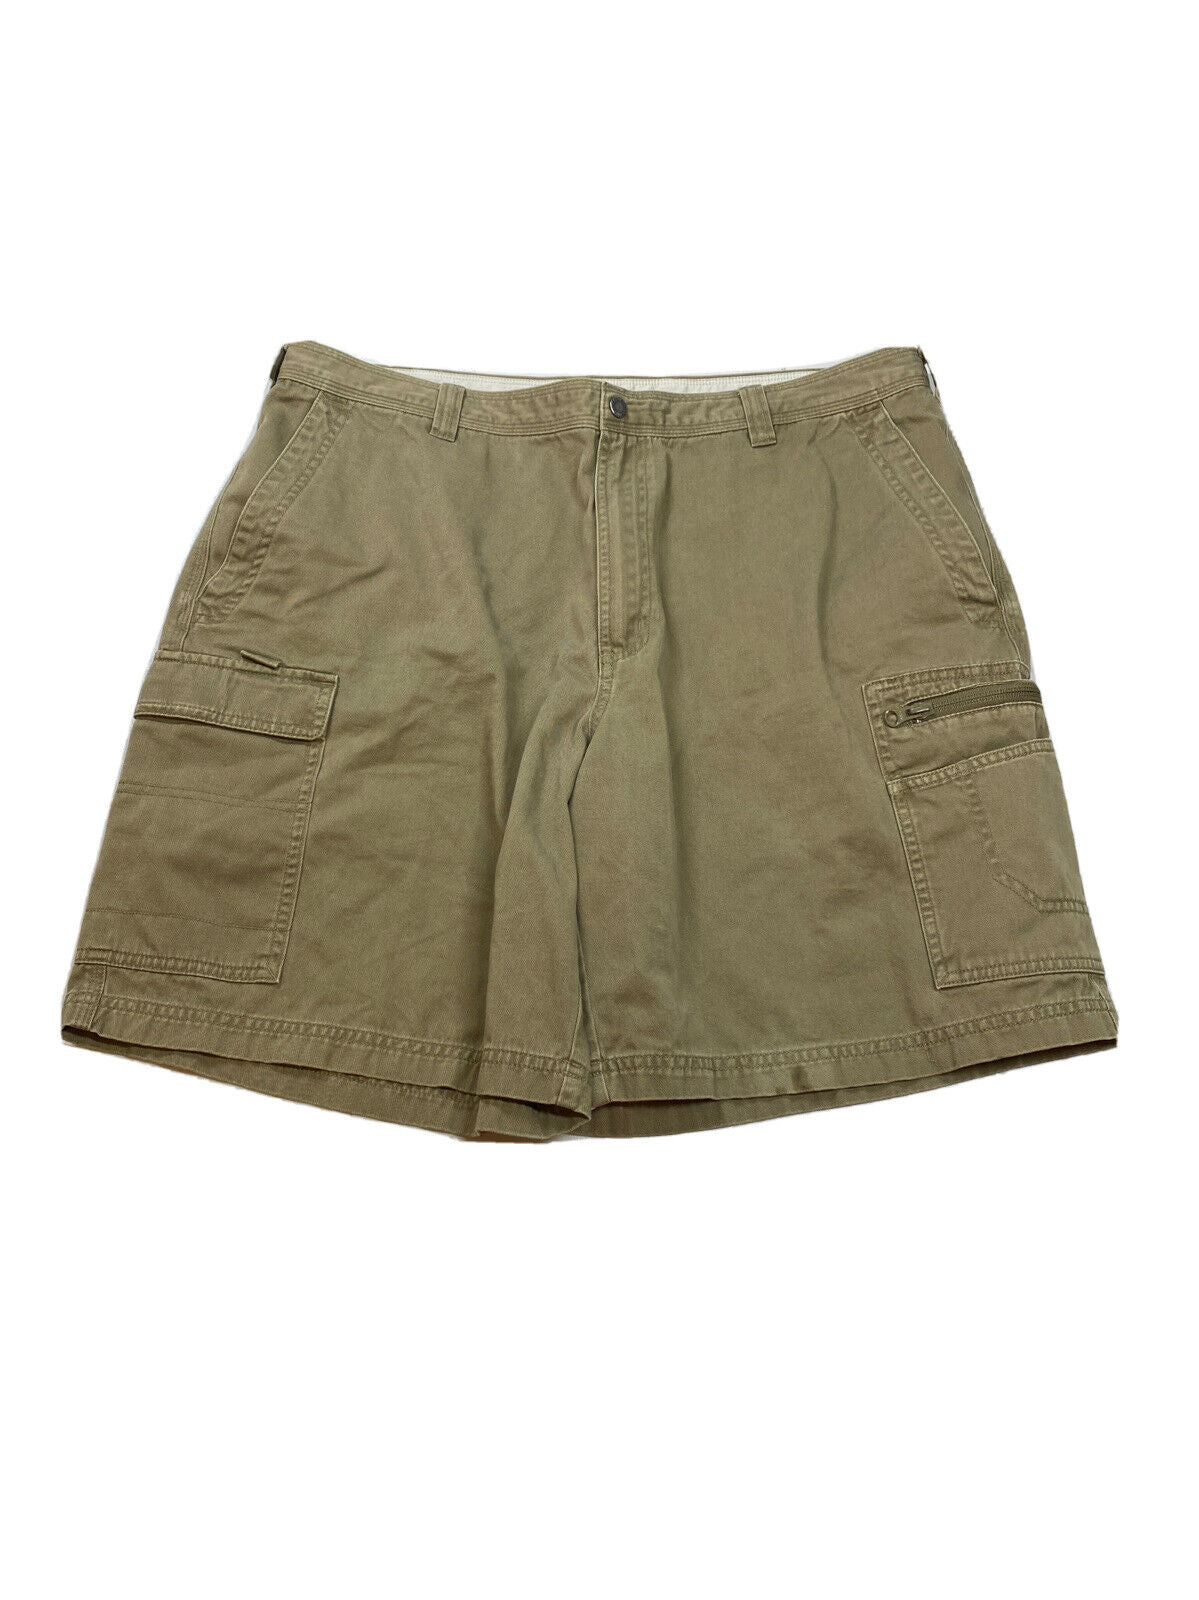 Columbia Men's Beige 100% Cotton Cargo Shorts - 38